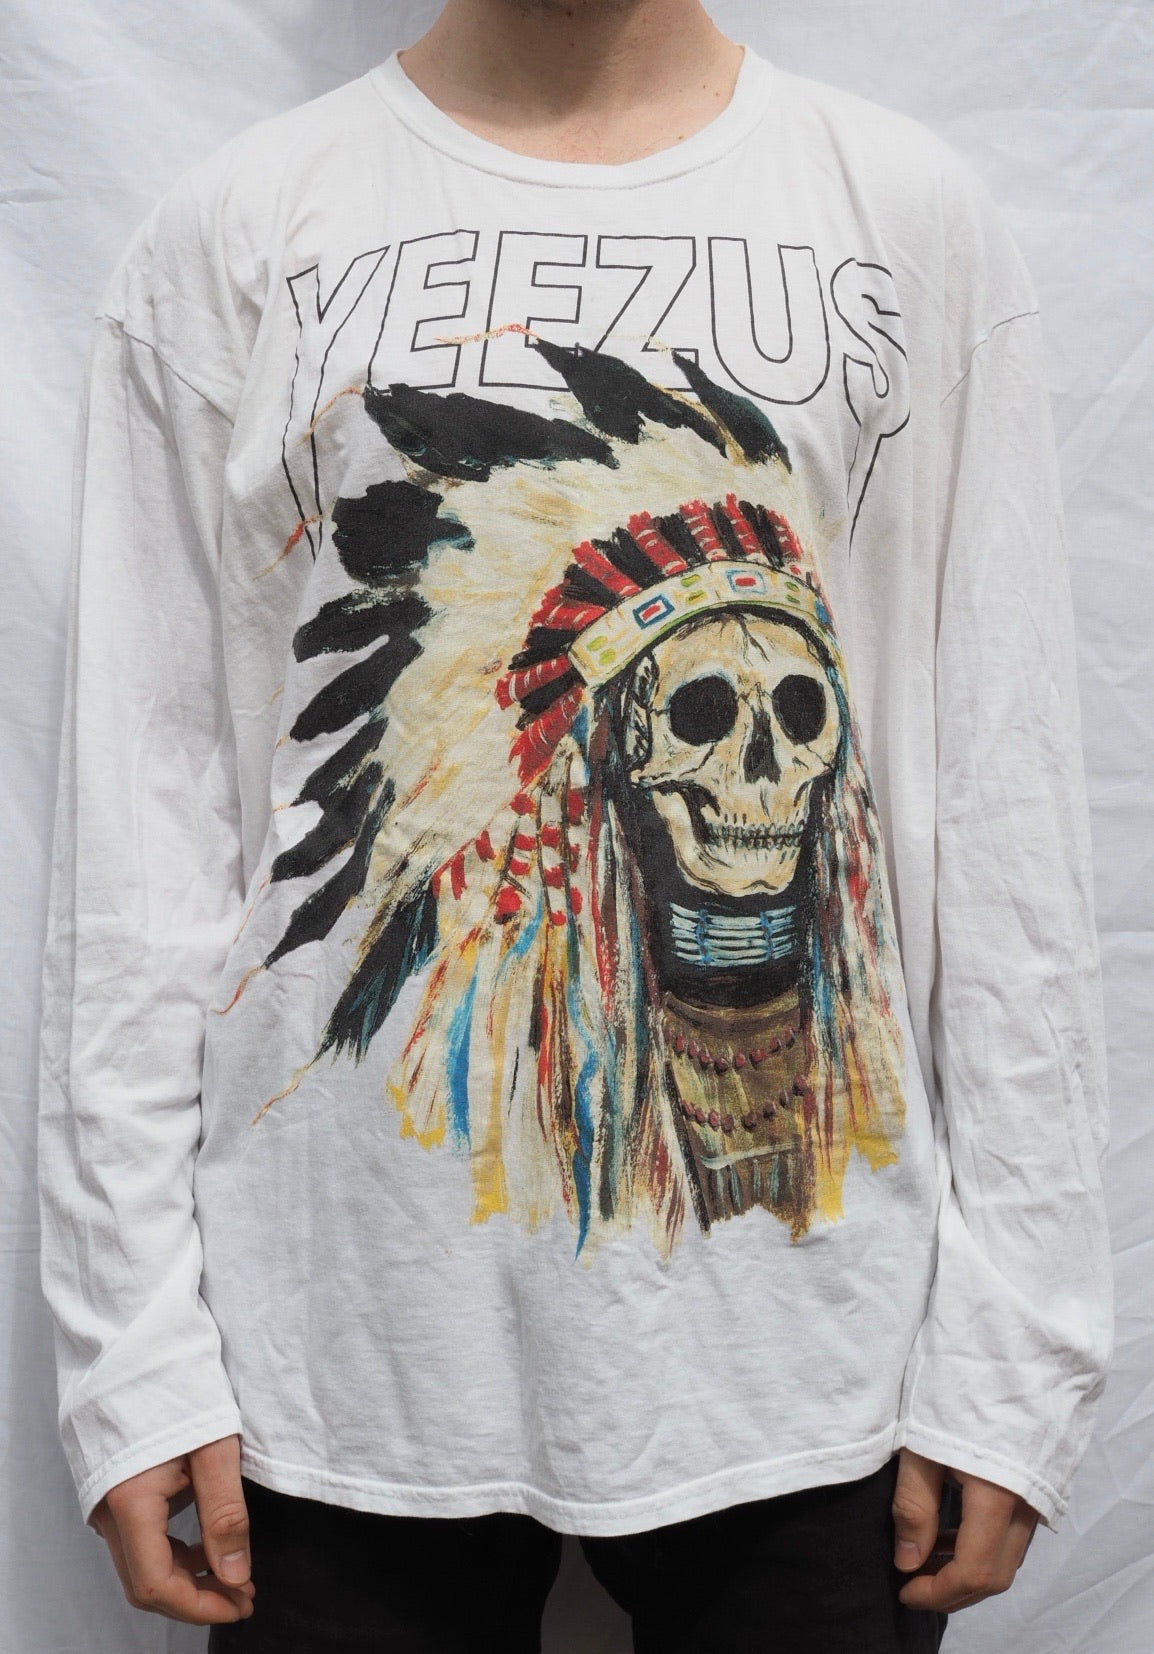 2013 Yeezus Kanye West Native Skull Tour Tee Shirt - Depop